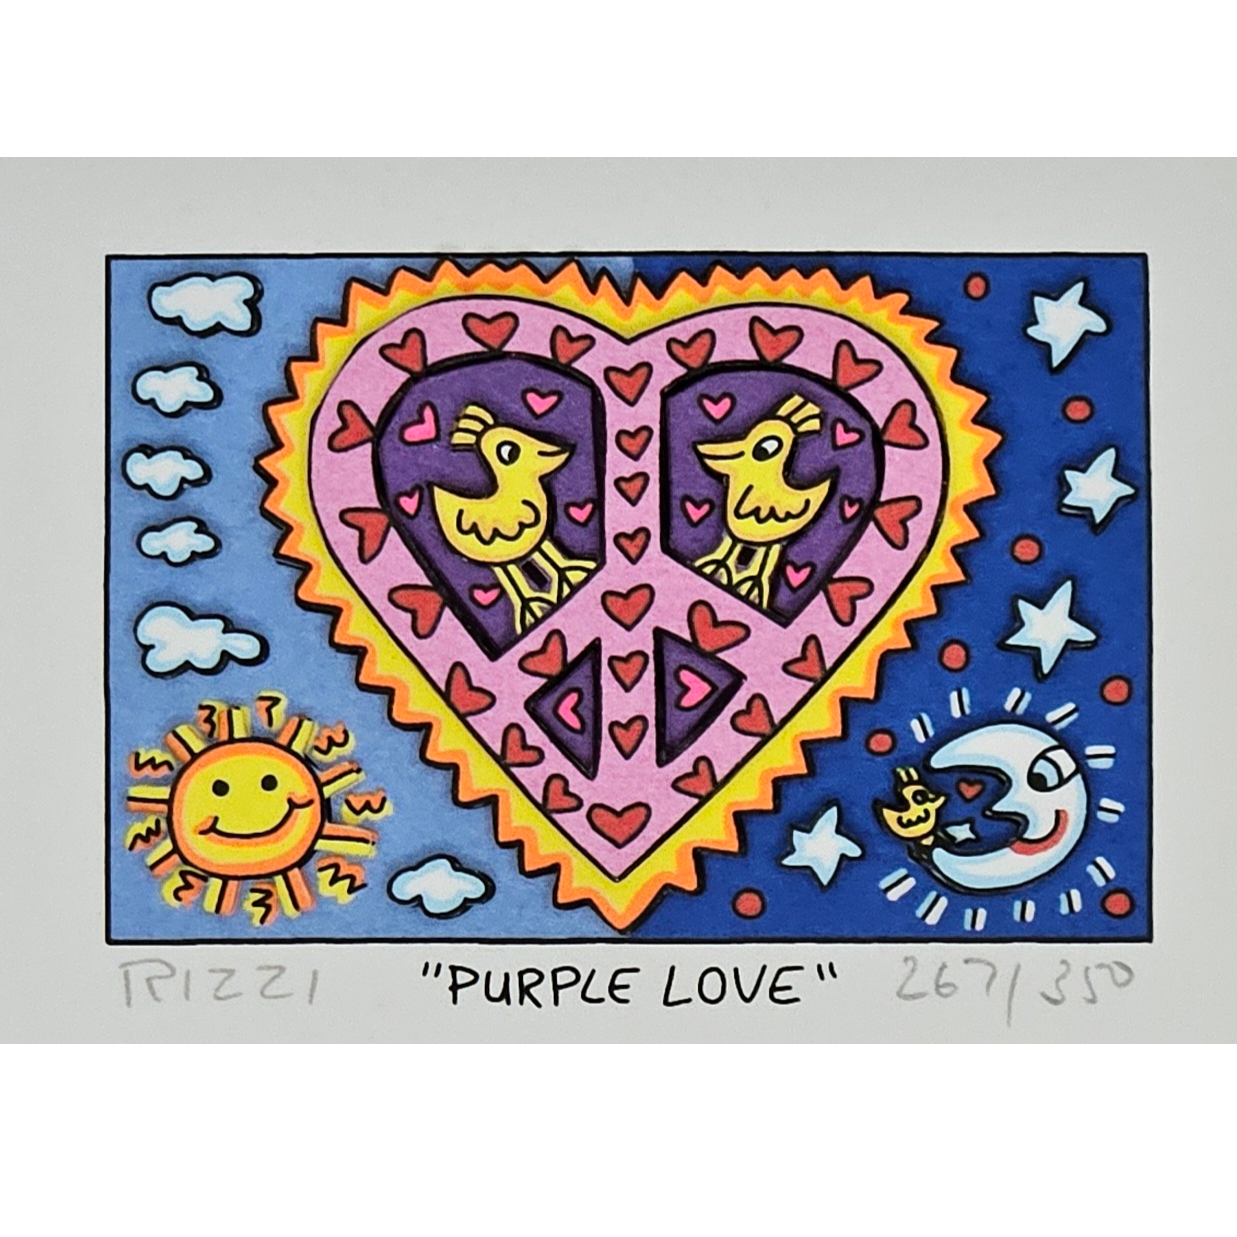 James Rizzi - Purple Love (2019)